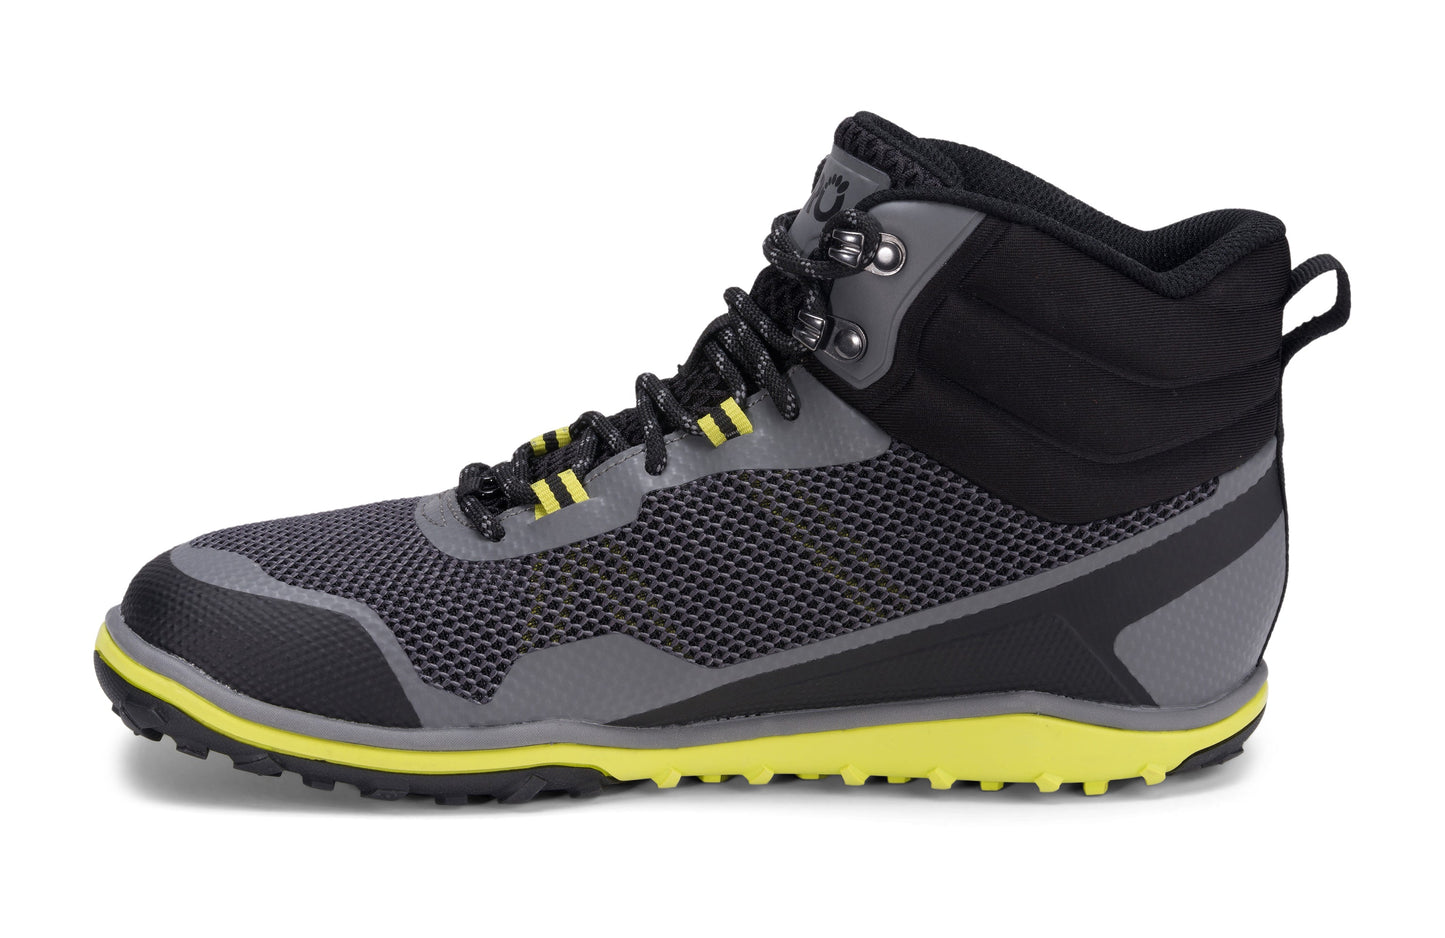 Xero Shoes Scrambler Mid Mens barfods lette vandrestøvler til mænd i farven steel gray / sulphur, inderside